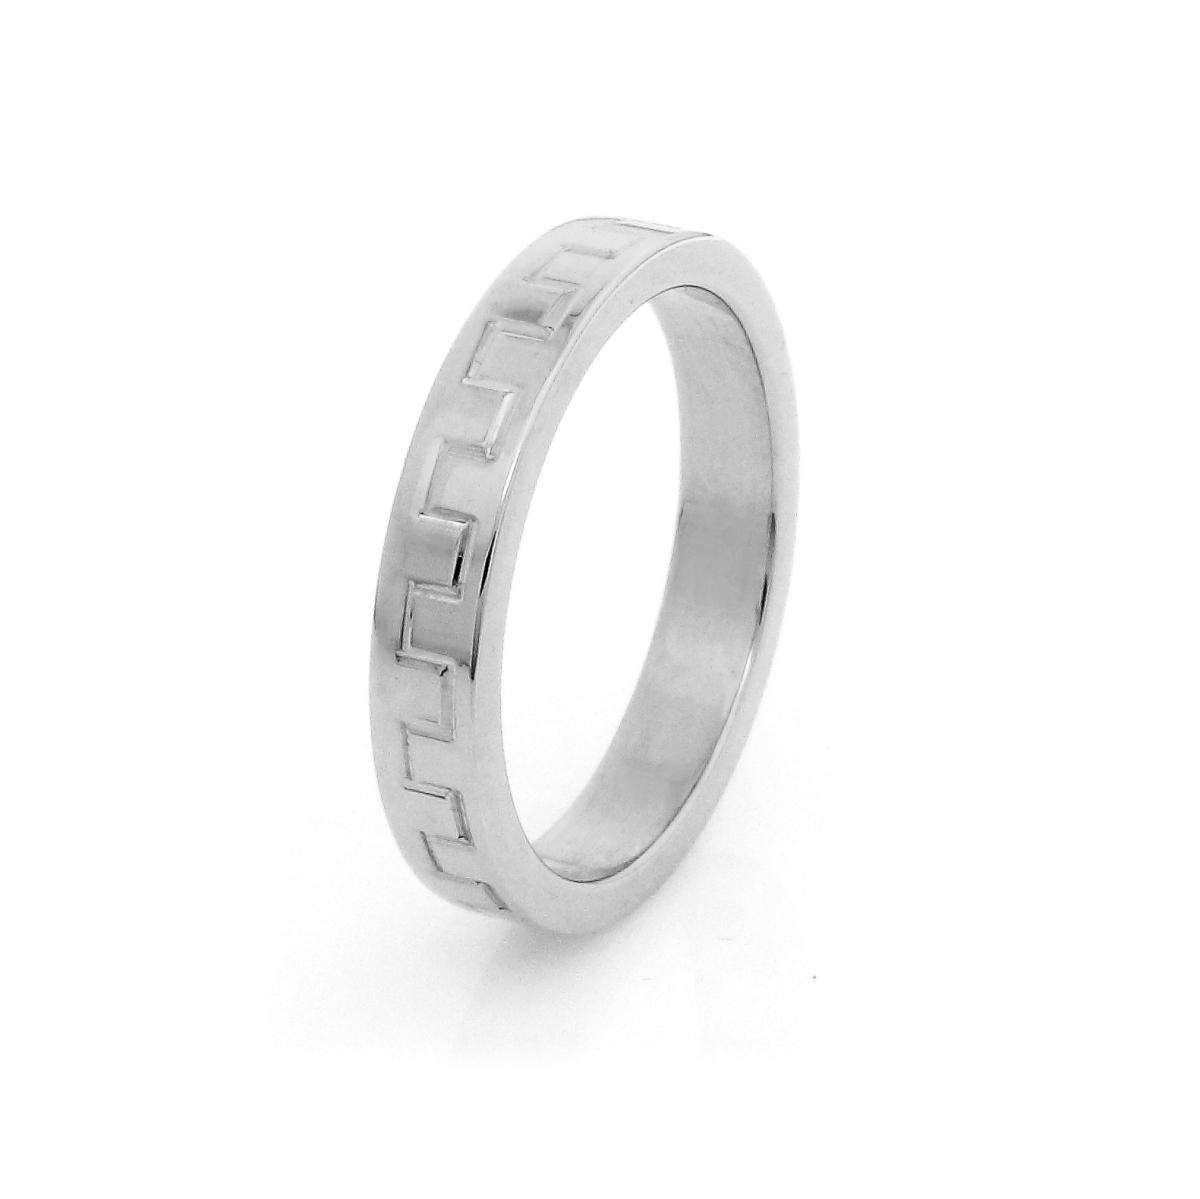 White Gold Wedding Ring 3,5 mm. Confort Flat